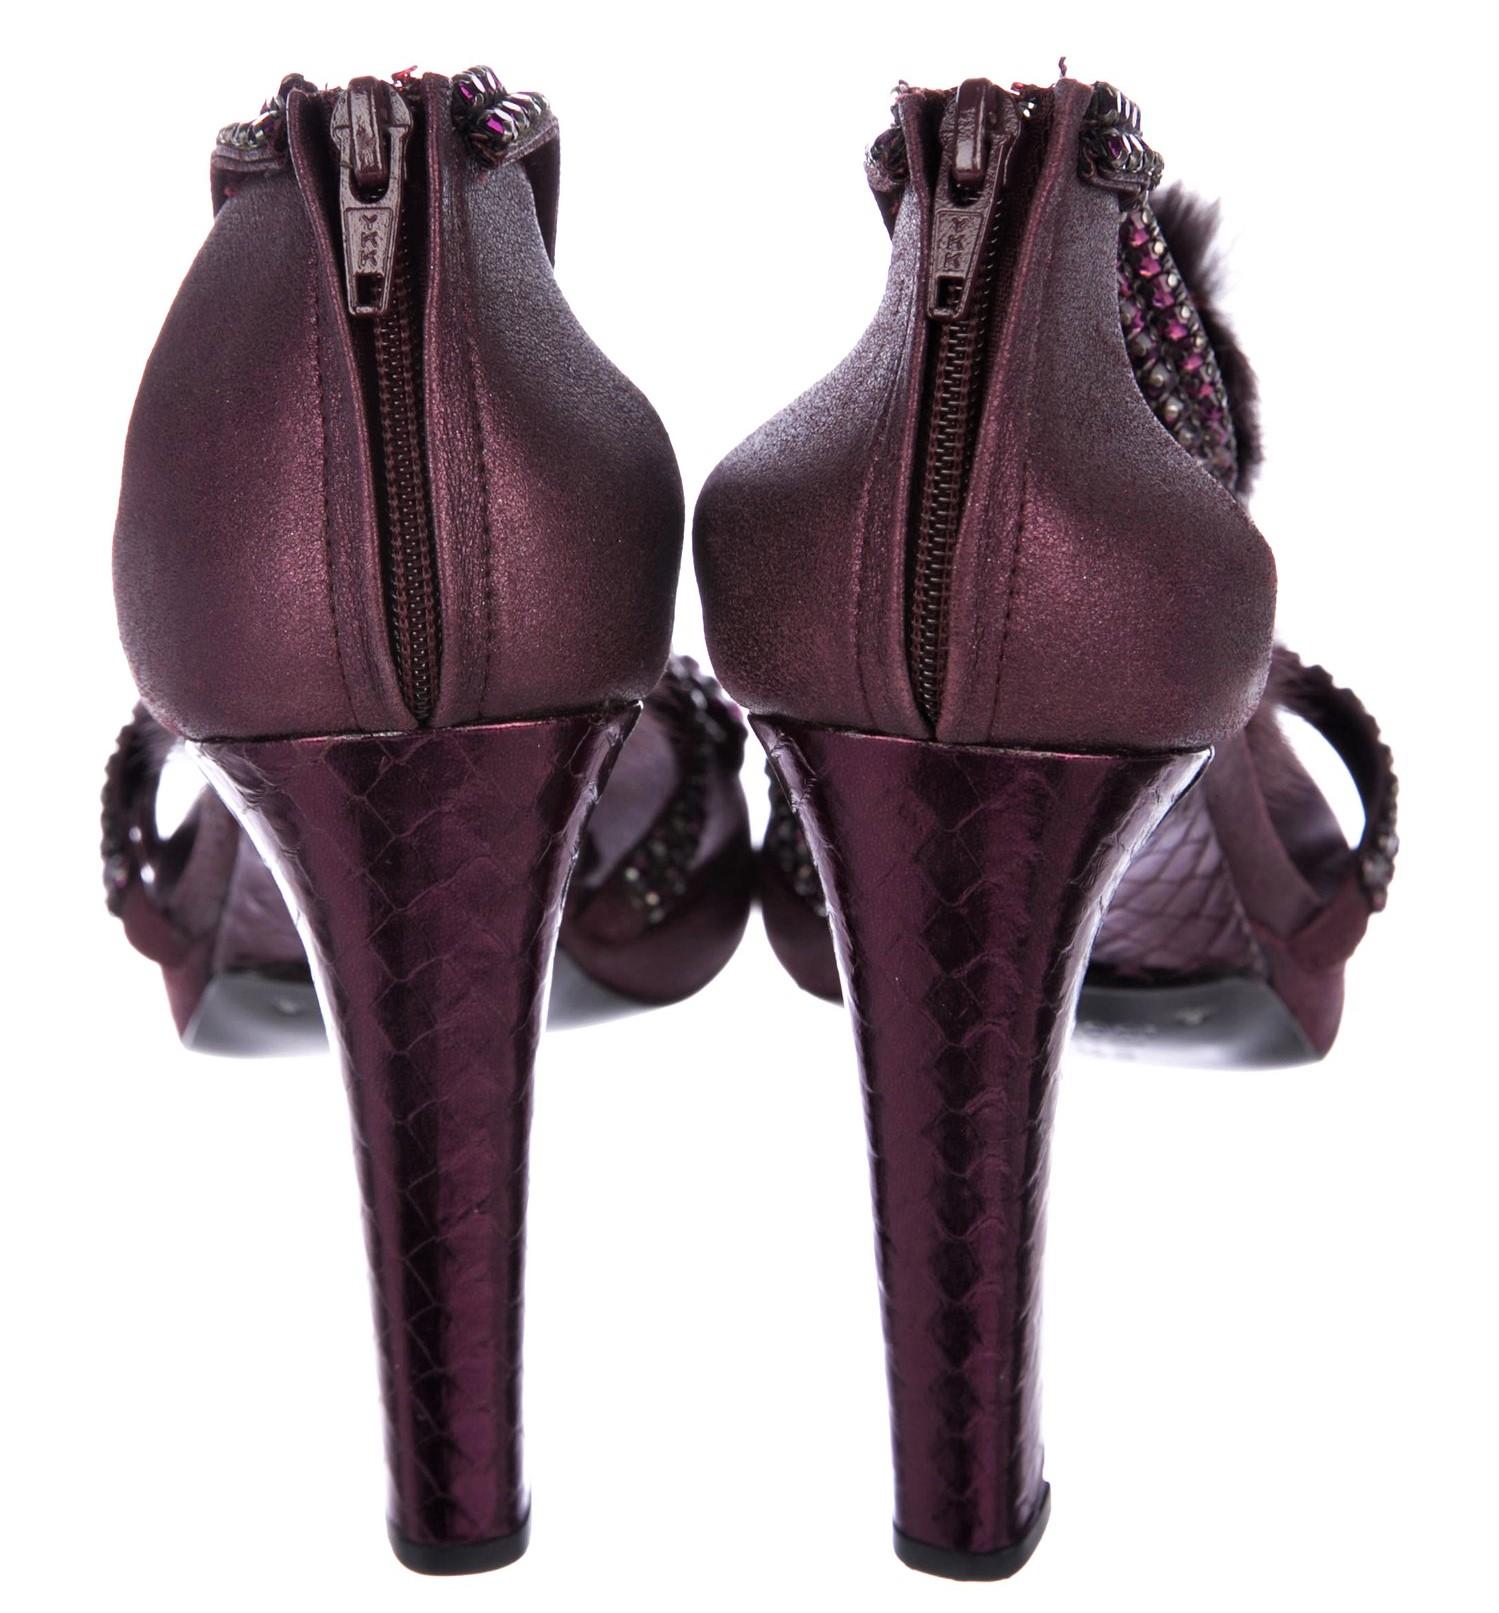 New Tom Ford For Gucci Mink Python Swarovski Final Collection Heels Sz 8.5 4